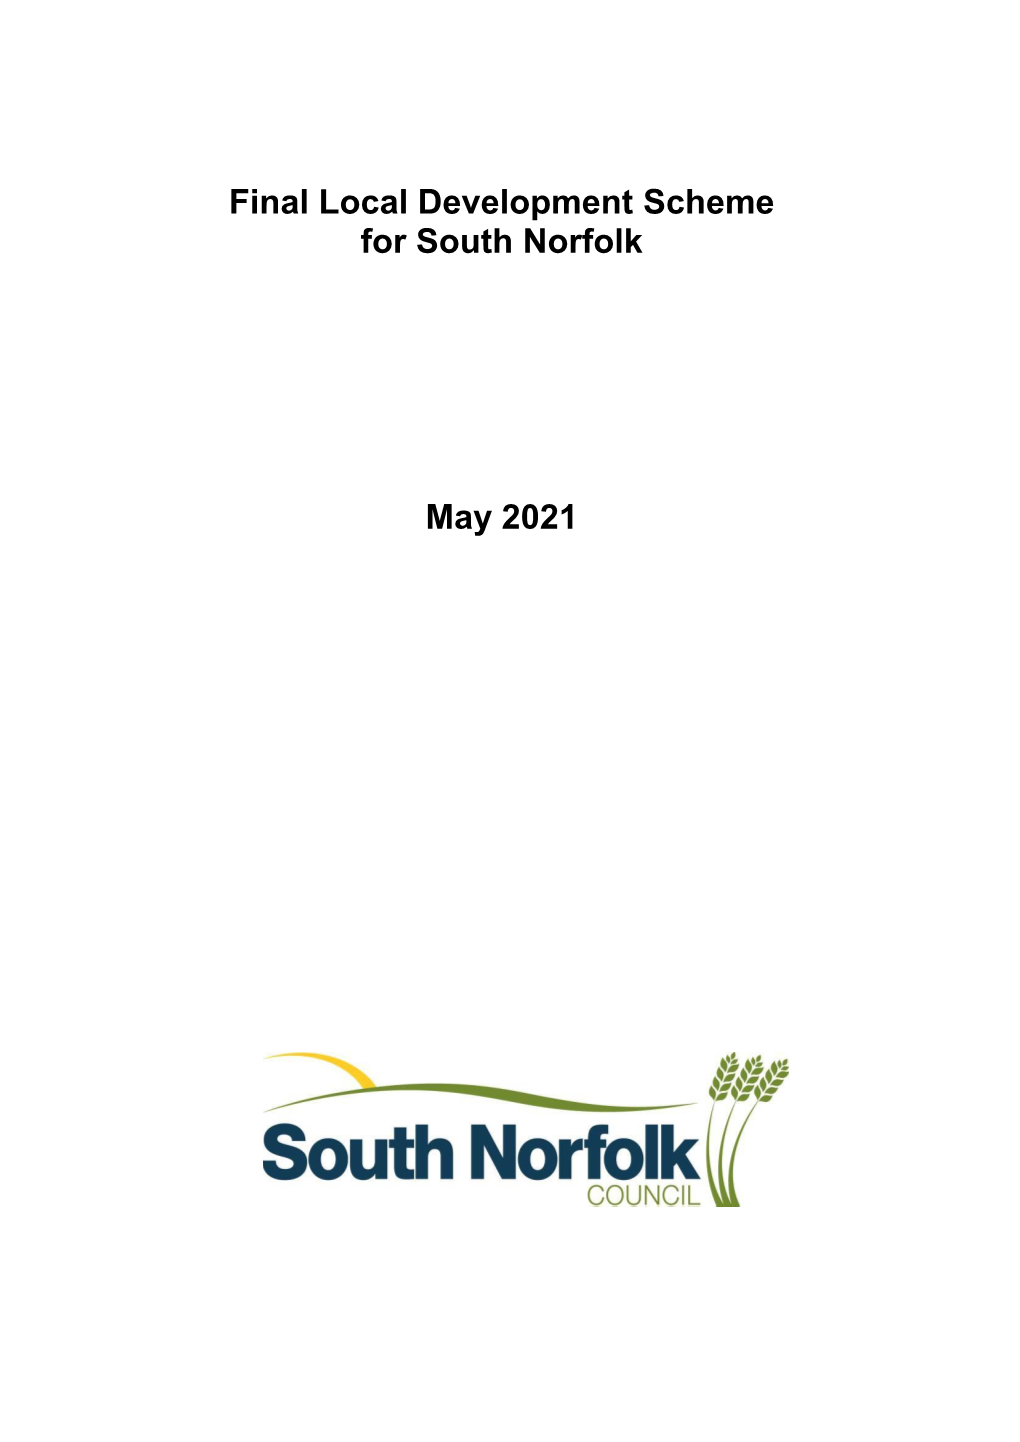 View the South Norfolk Council Local Development Scheme